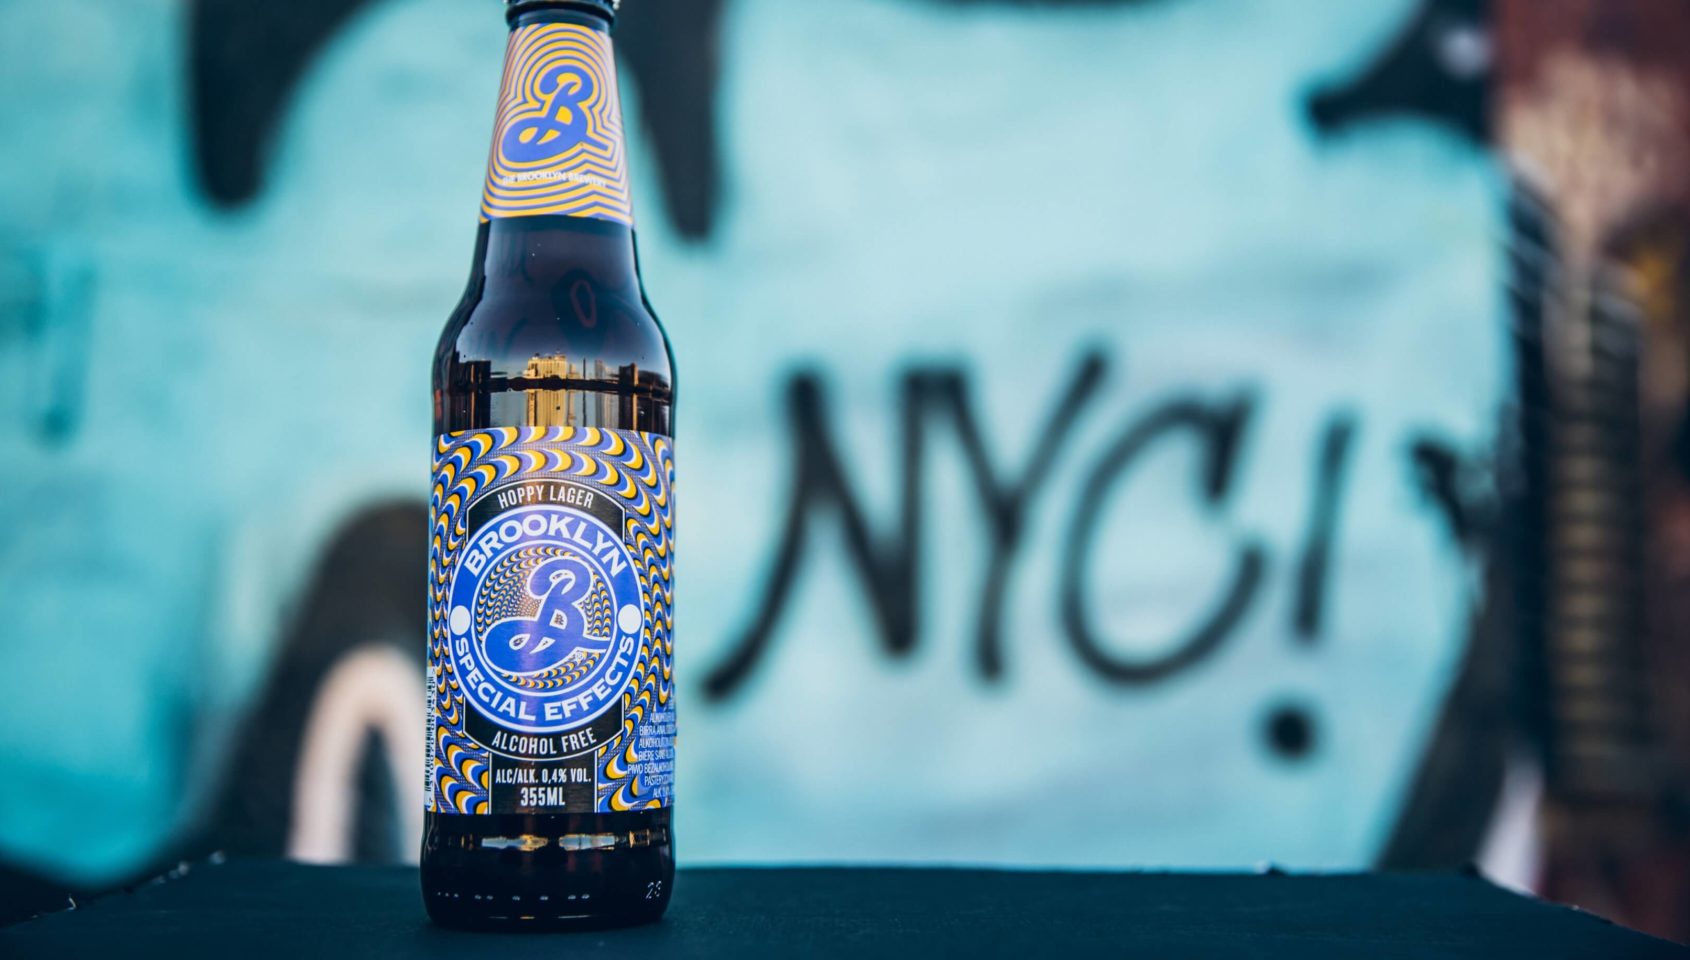 Brooklyn Special Effects IPA 0.4% - Bière sans alcool - Brooklyn Brewery